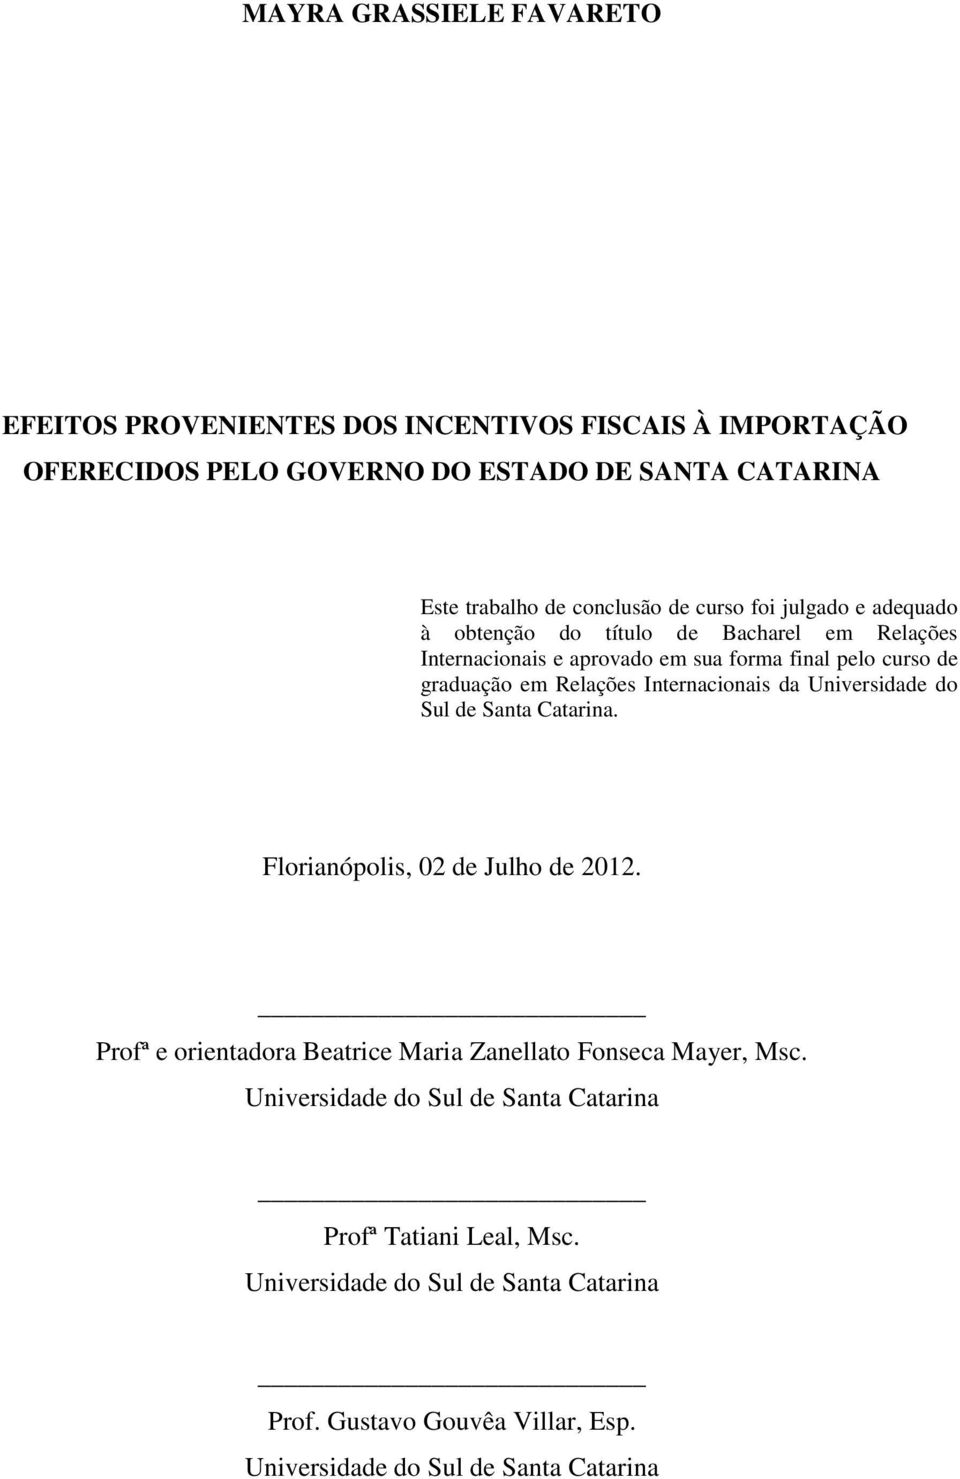 Internacionais da Universidade do Sul de Santa Catarina. Florianópolis, 02 de Julho de 2012. Profª e orientadora Beatrice Maria Zanellato Fonseca Mayer, Msc.